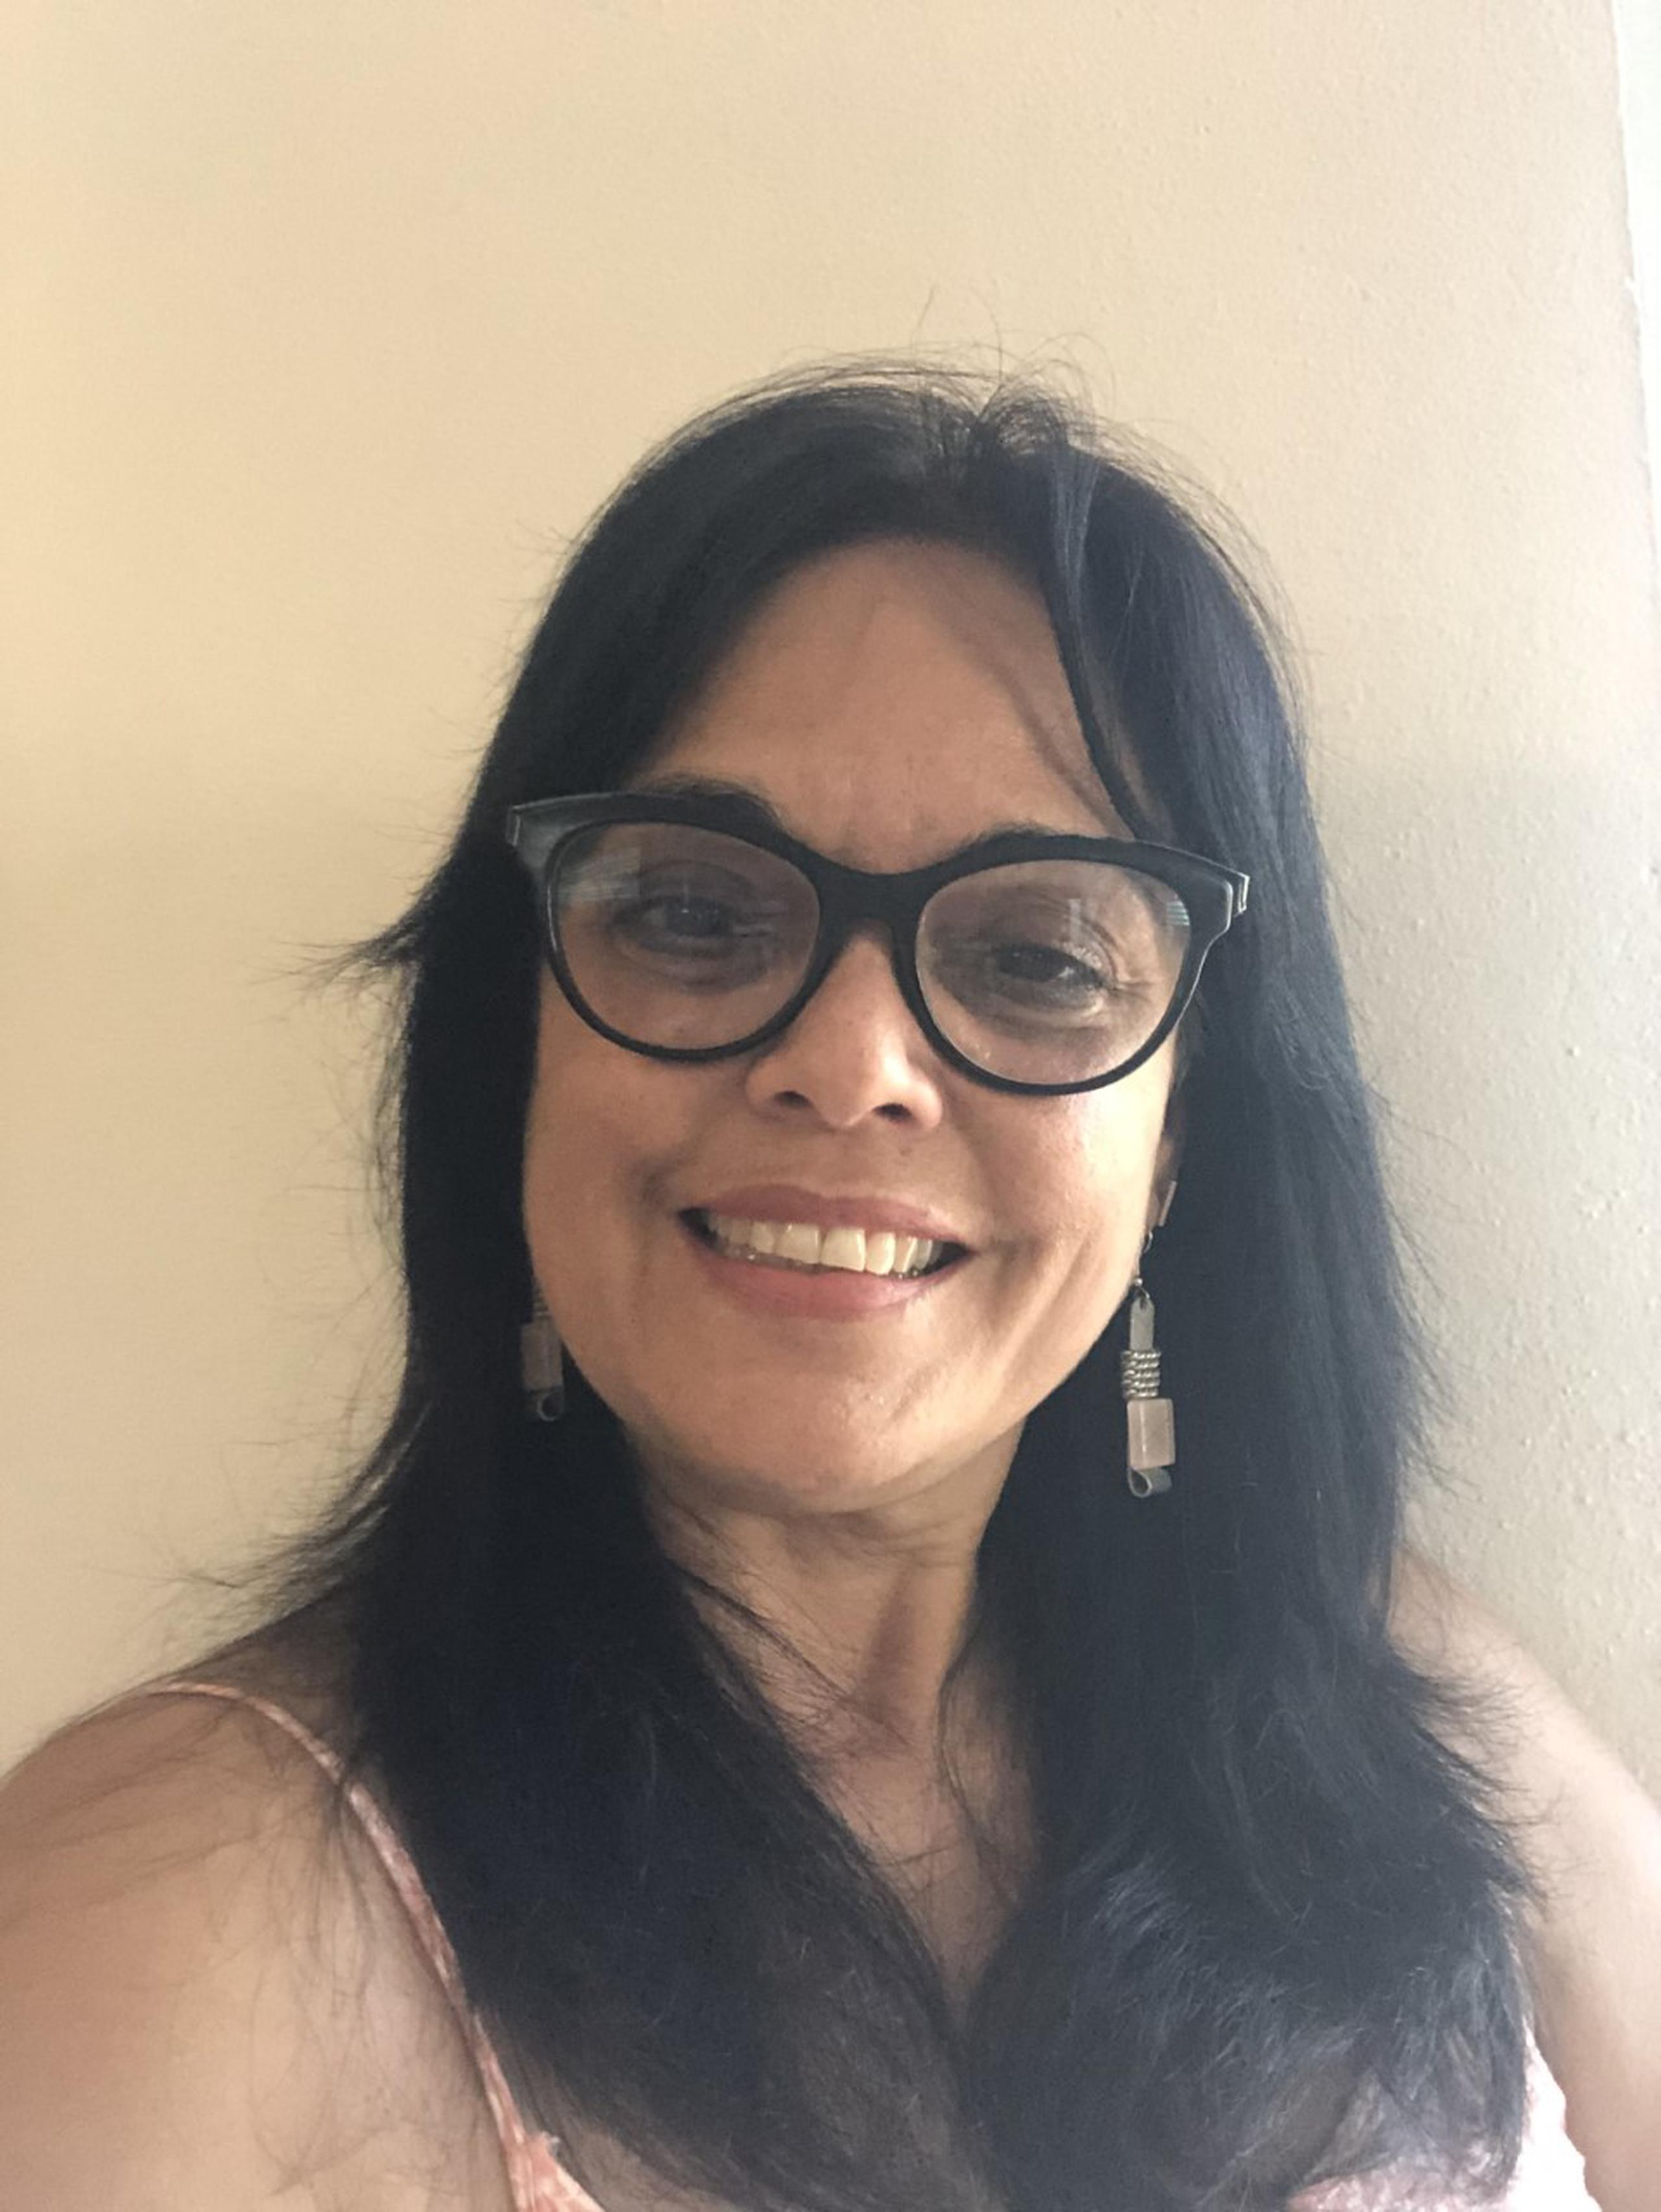 Dra. Nellie Zambrana Ortiz
Catedrática y Legisladora Municipal en Trujillo Alto